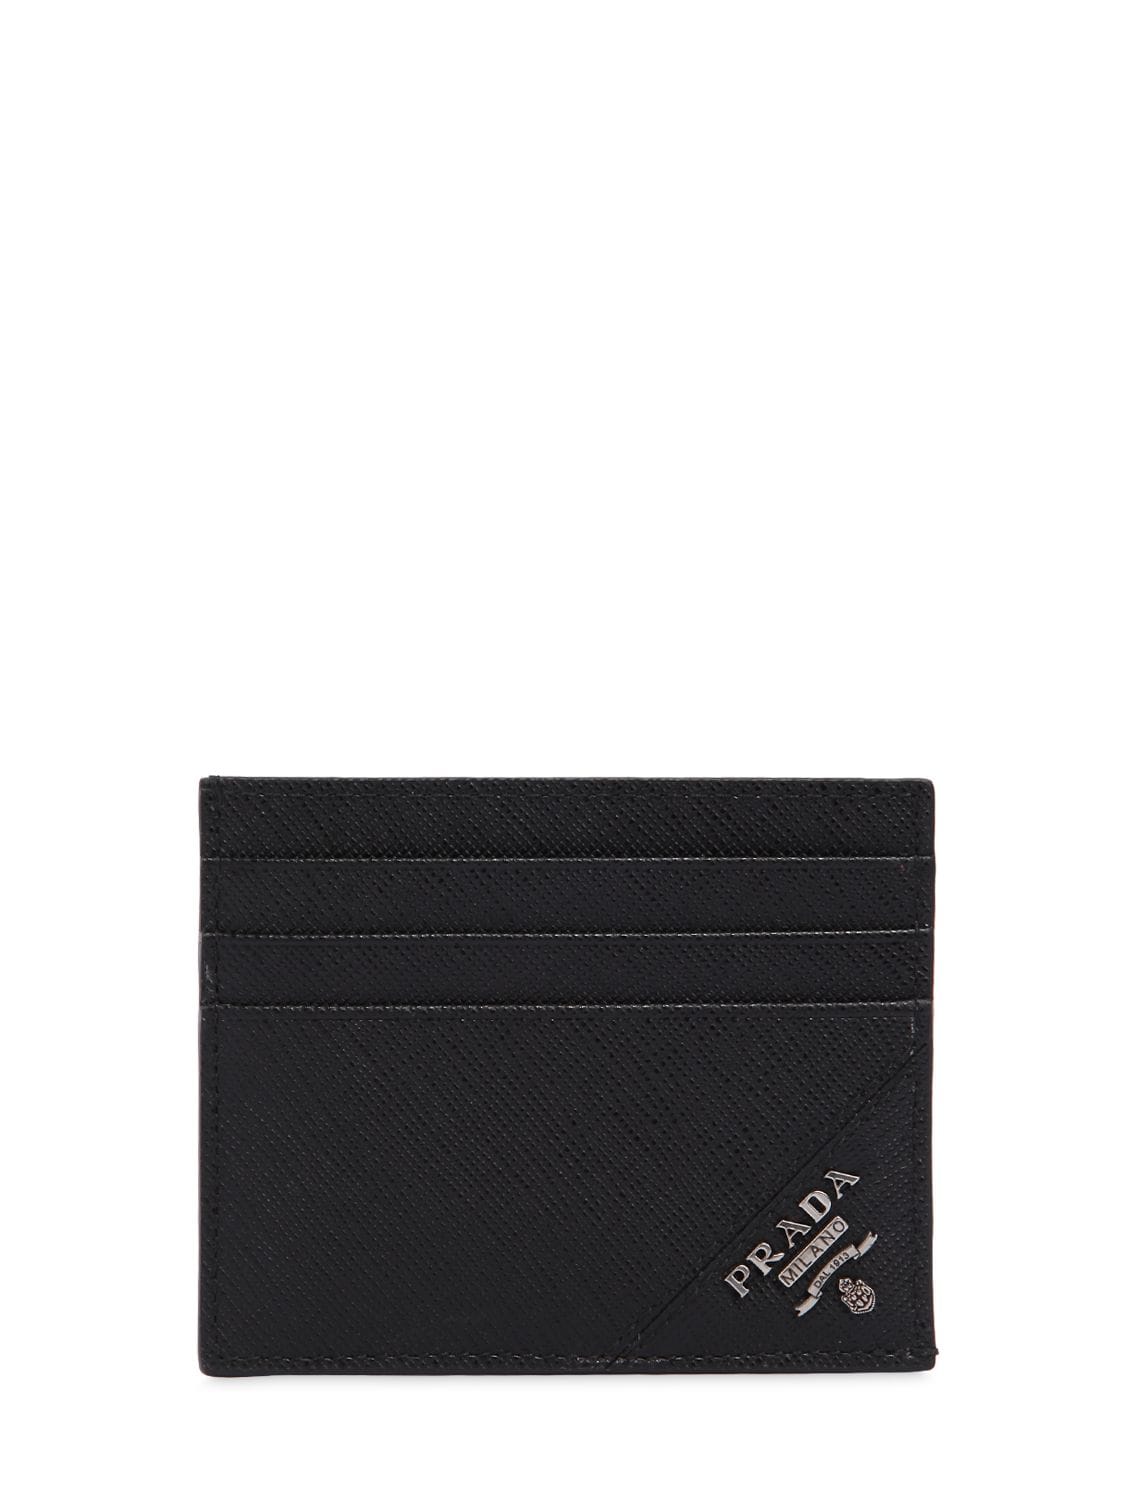 Cartilio Saffiano Leather Card Holder | The Fashionisto